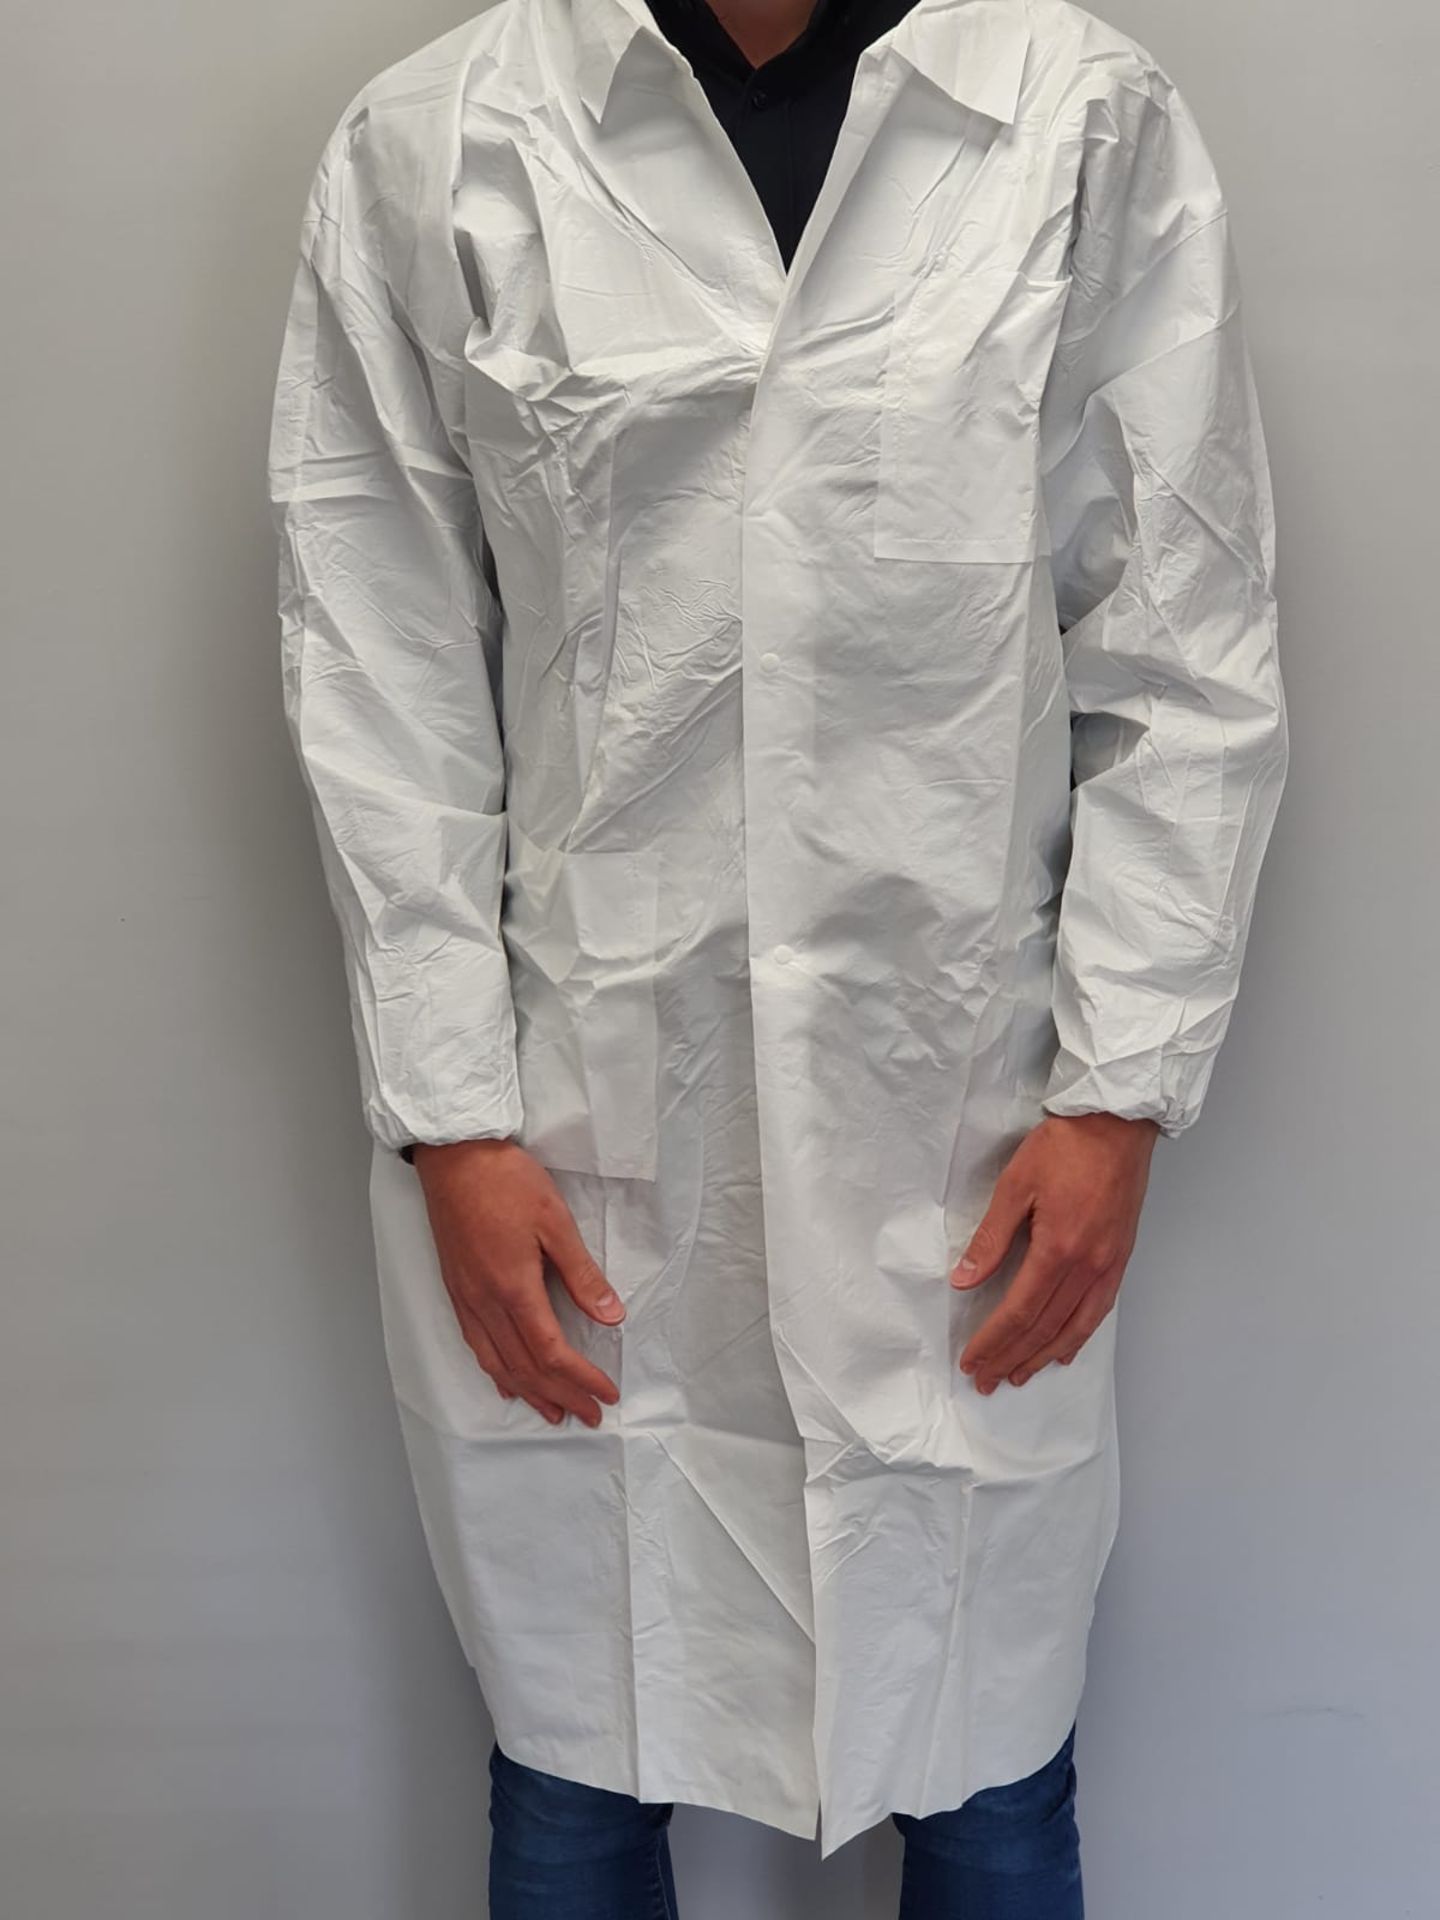 50 Disposable Lab Coats